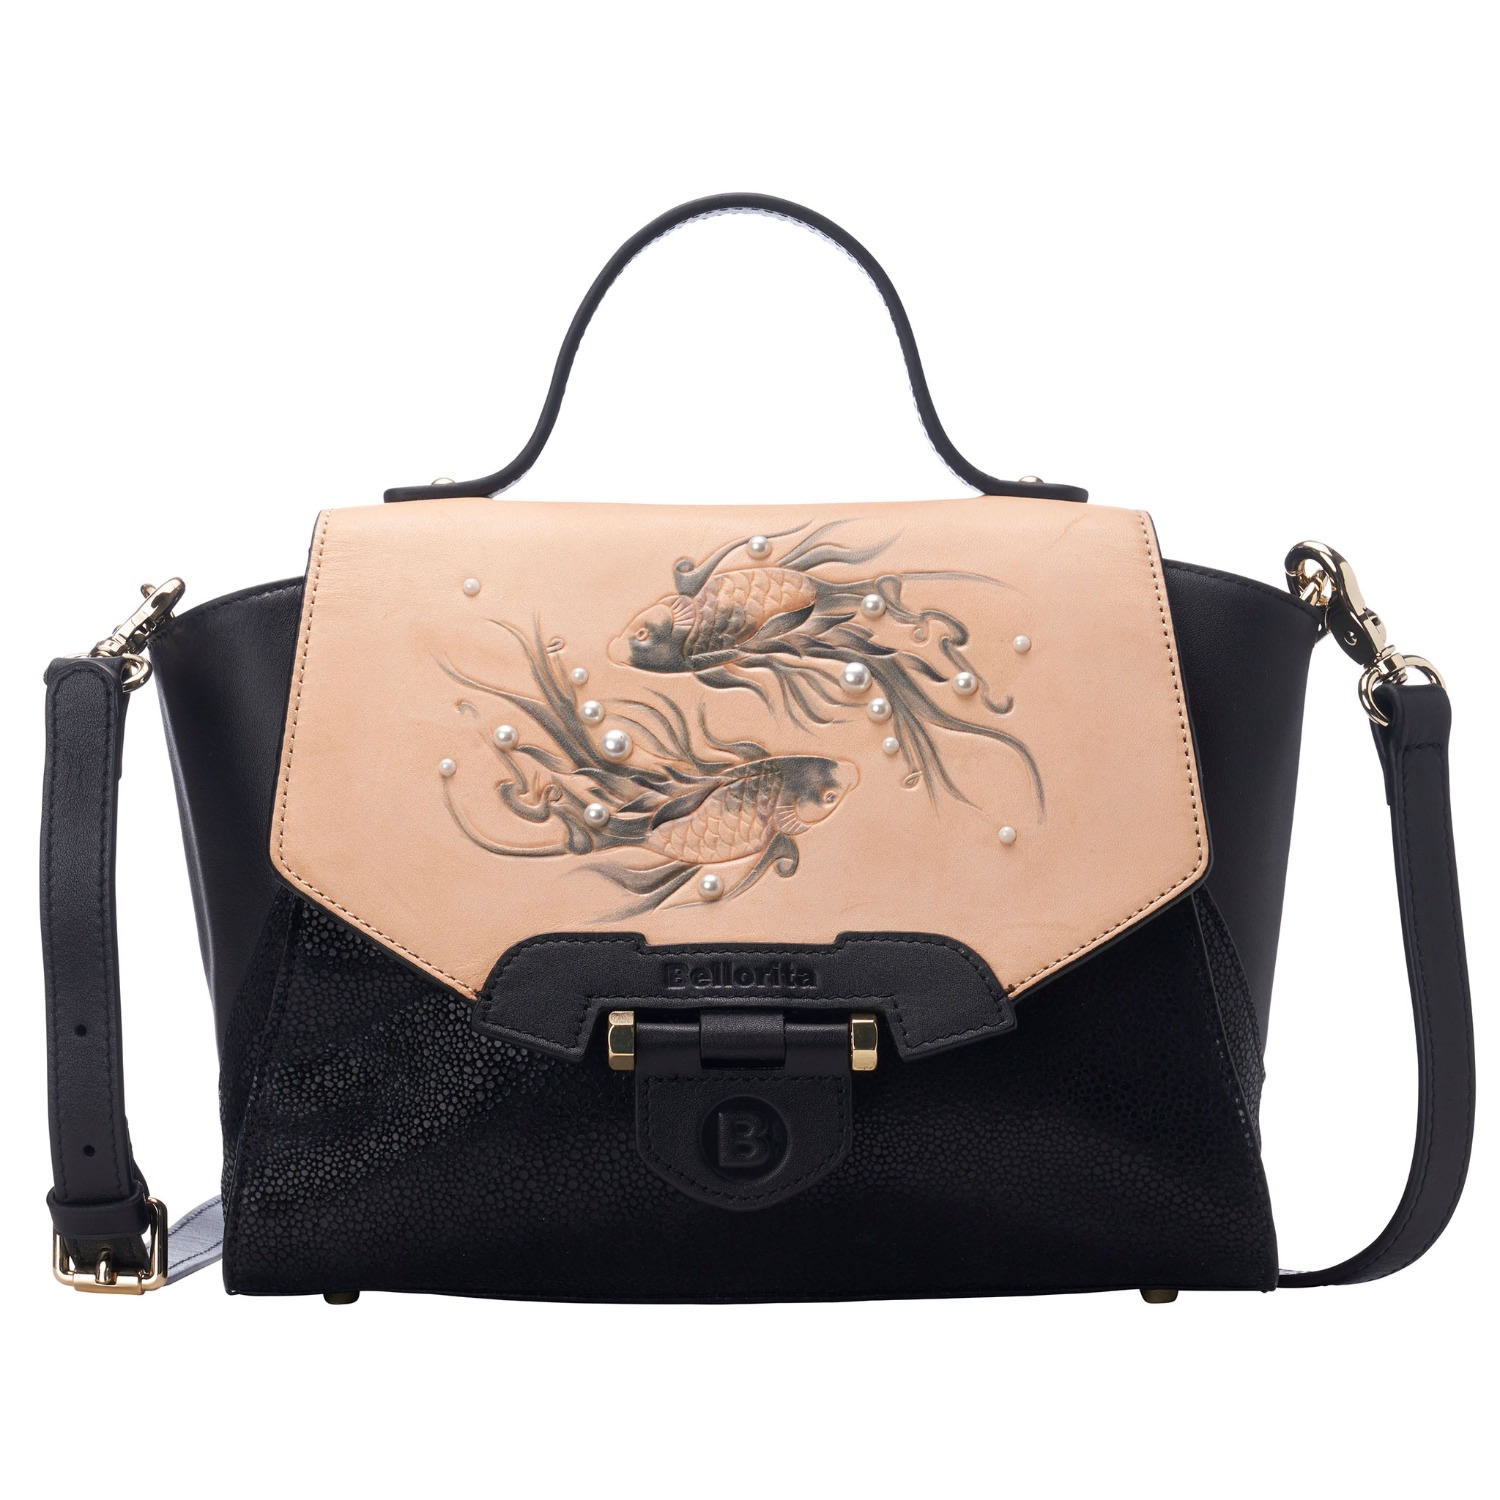 Women’s Koi Satchel Leather Bag Small Black Bellorita